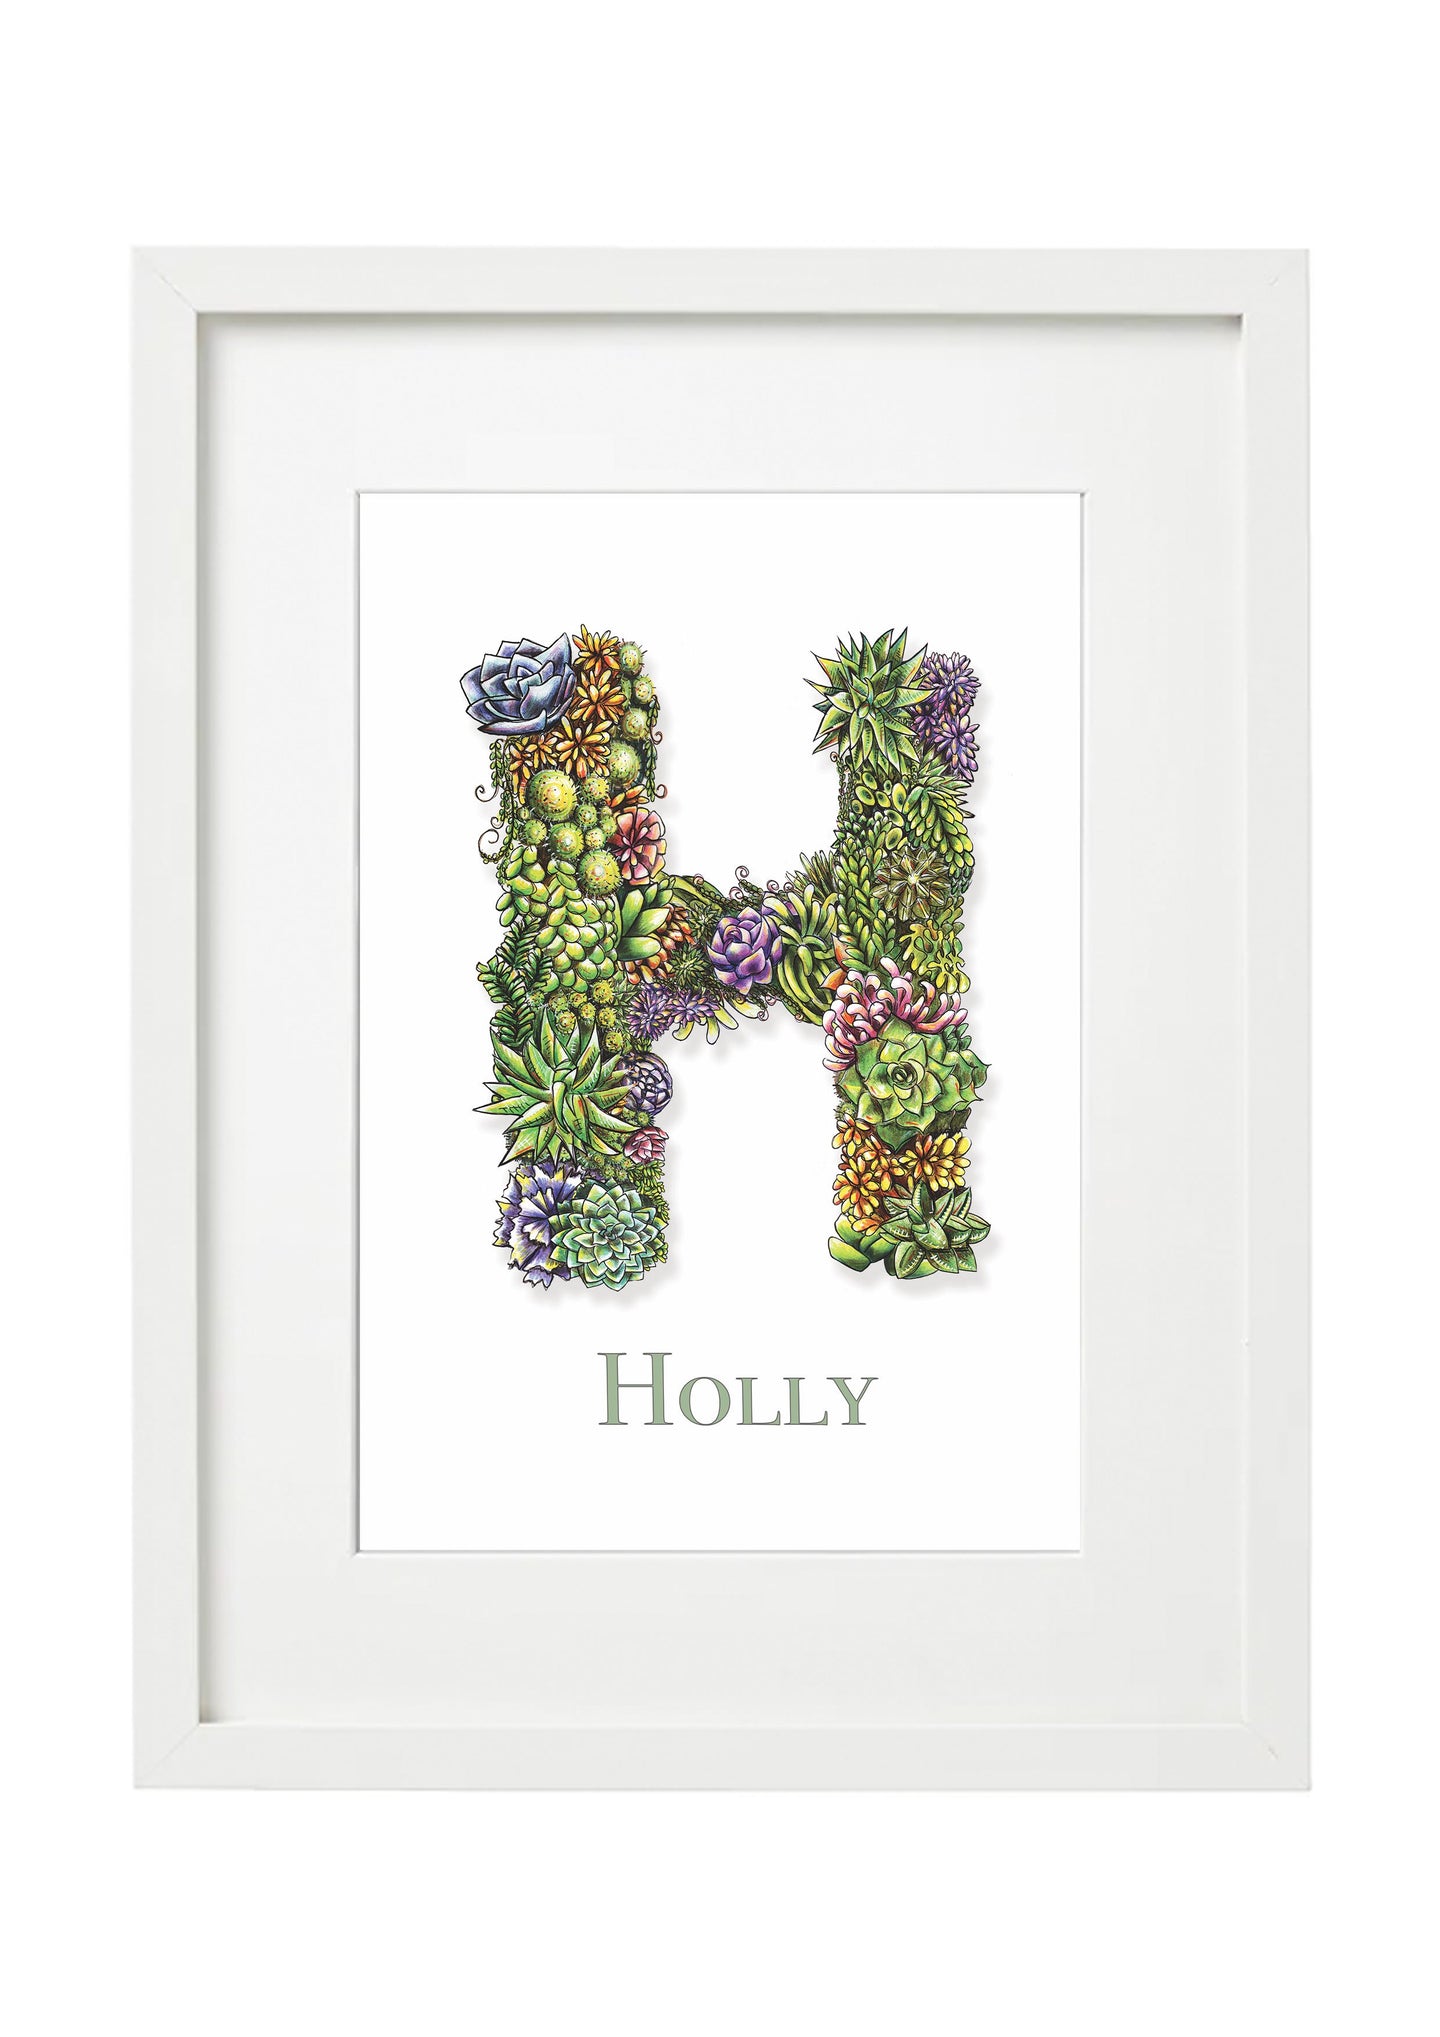 'H' Alphabet Print Lucy Hughes Creations 